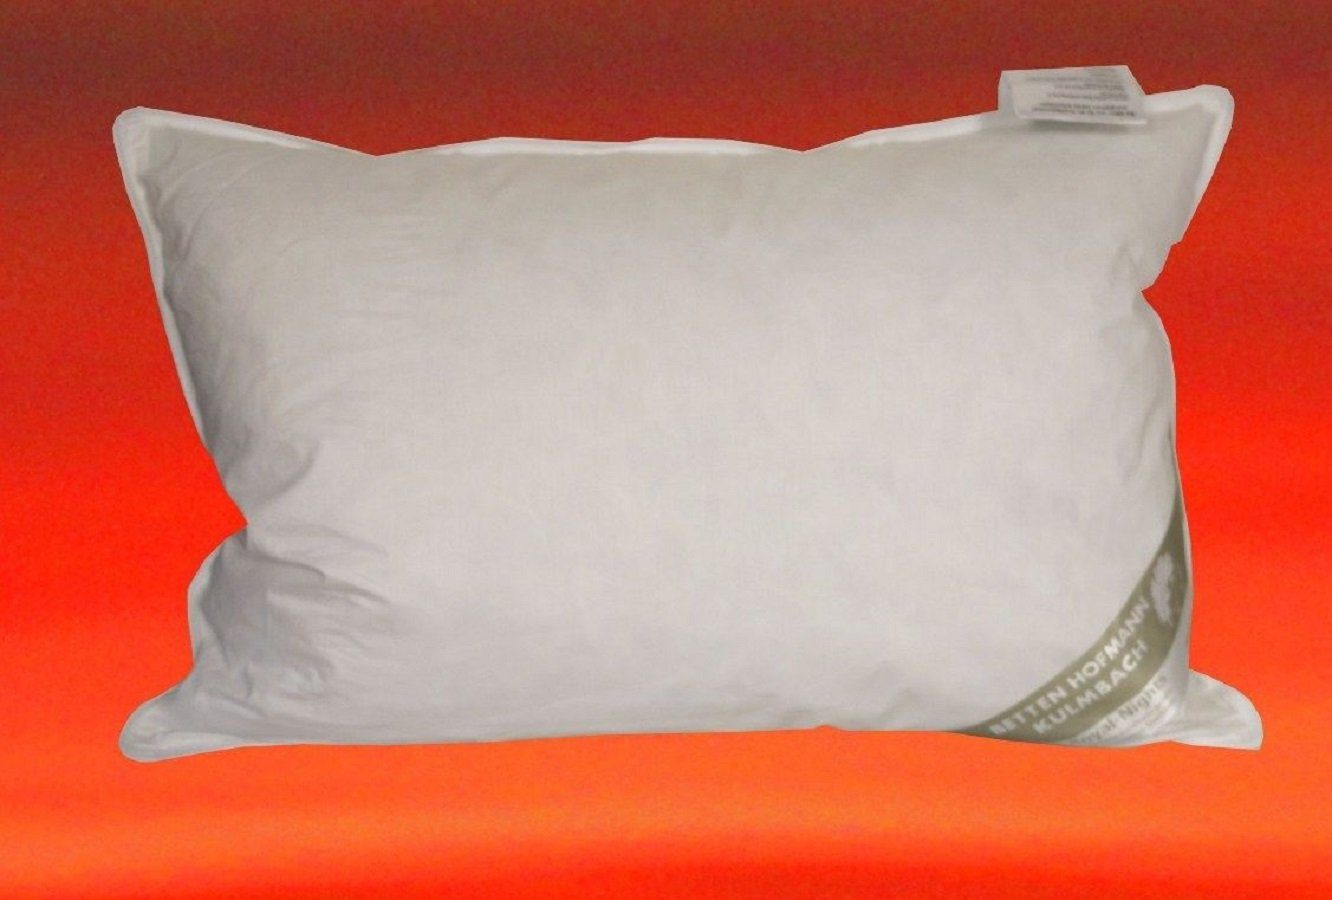 Kopfkissen Betten Bezug: Daunen Hofmann, Baumwolle, 100% weich, Kissen angenehm 43x63cm Seitenschläfer Kopfkissen, Kopfkissen Daunenkissen Rückenschläfer, 60% JAPAN